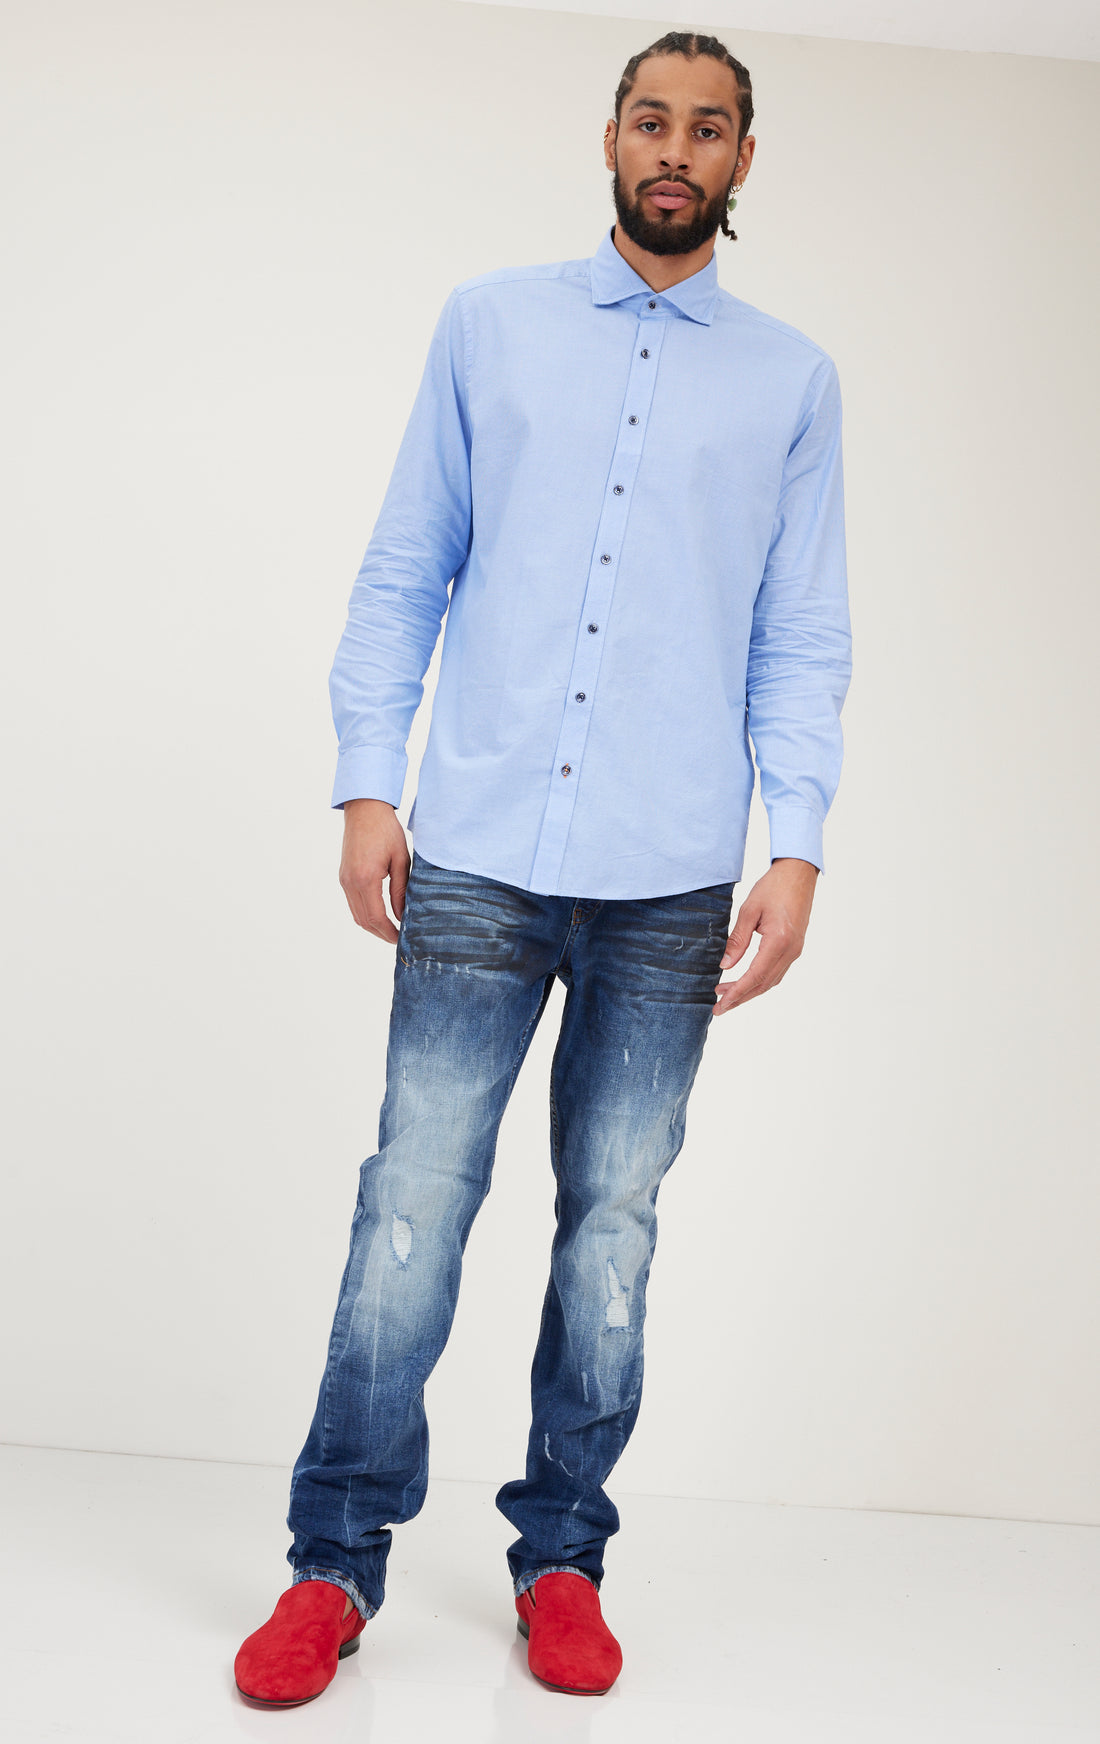 Jacquard Cotton Tonal Button Dress Shirt - Light Blue